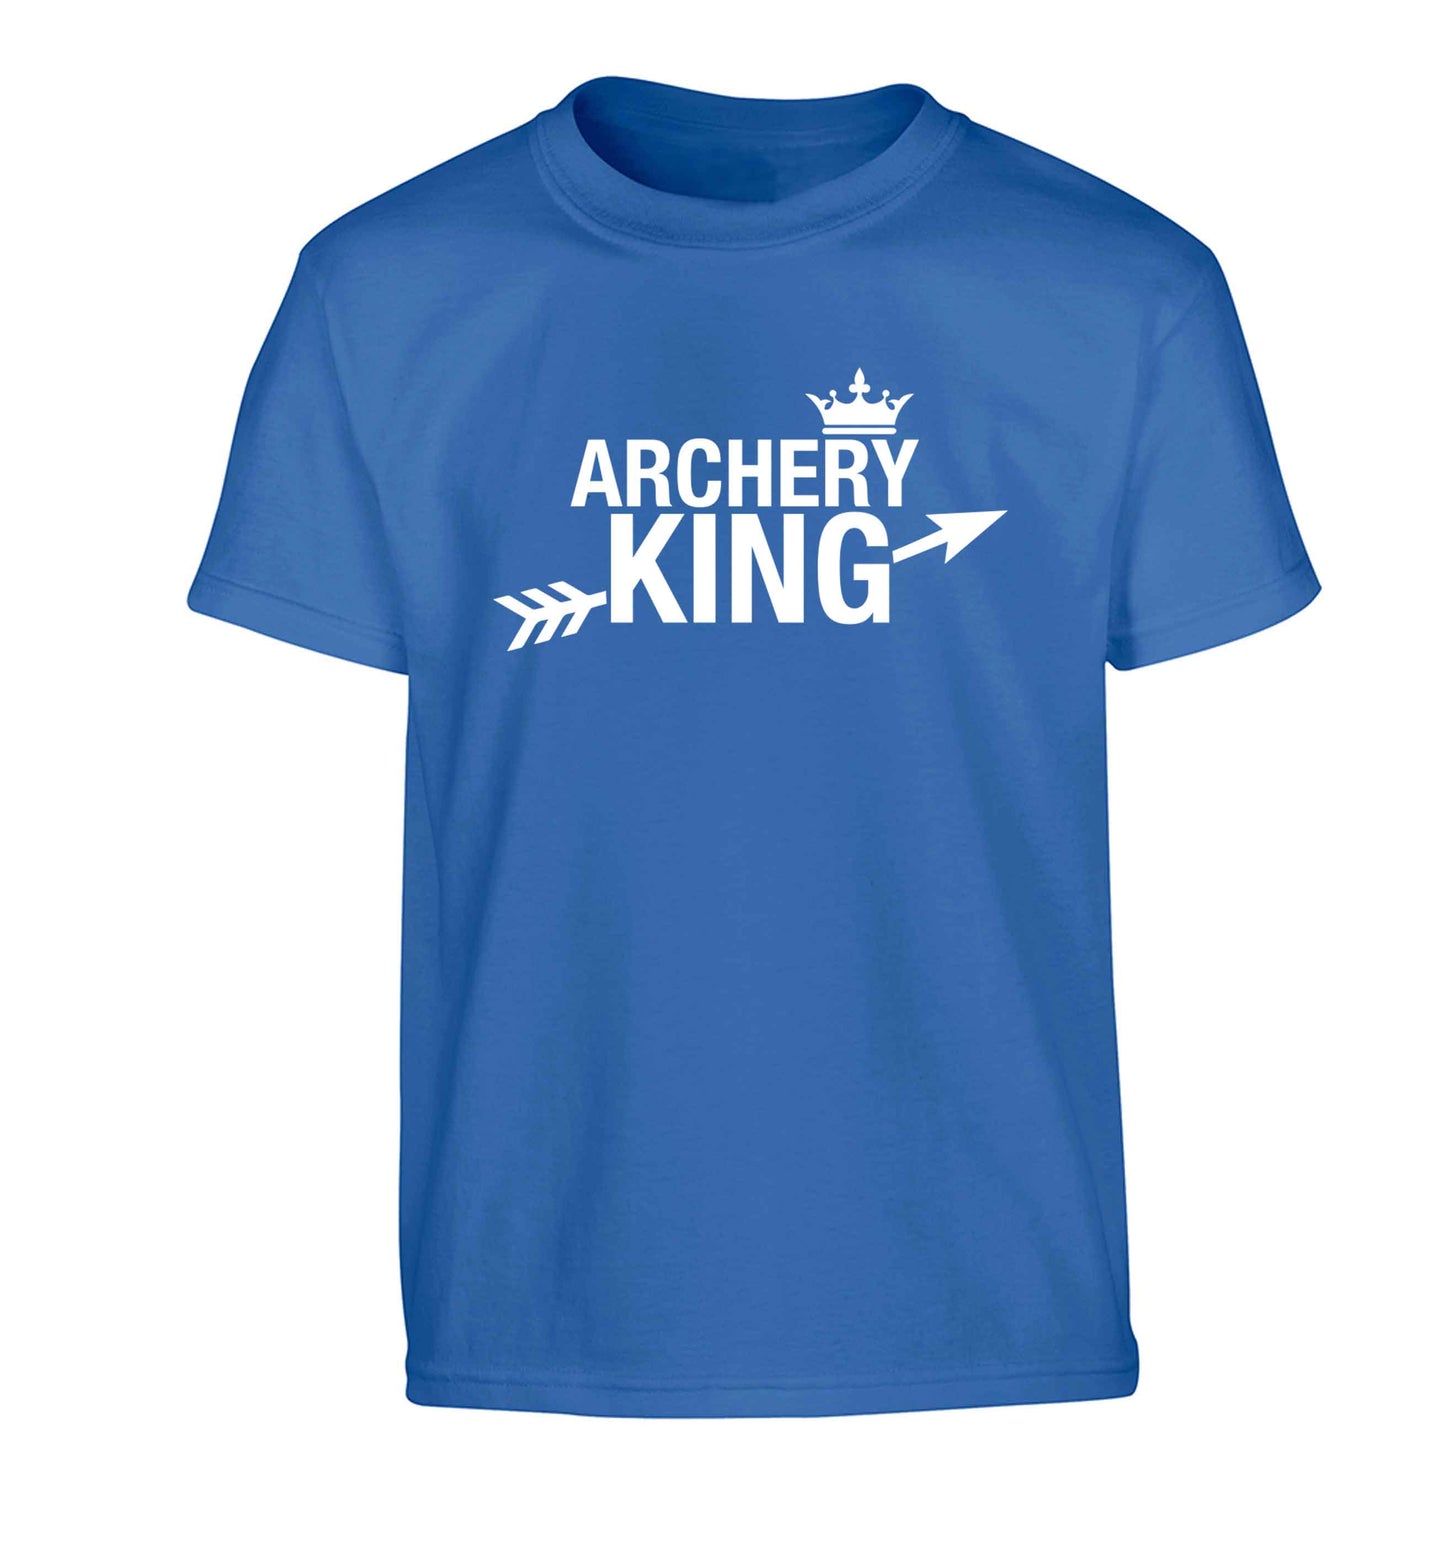 Archery king Children's blue Tshirt 12-13 Years